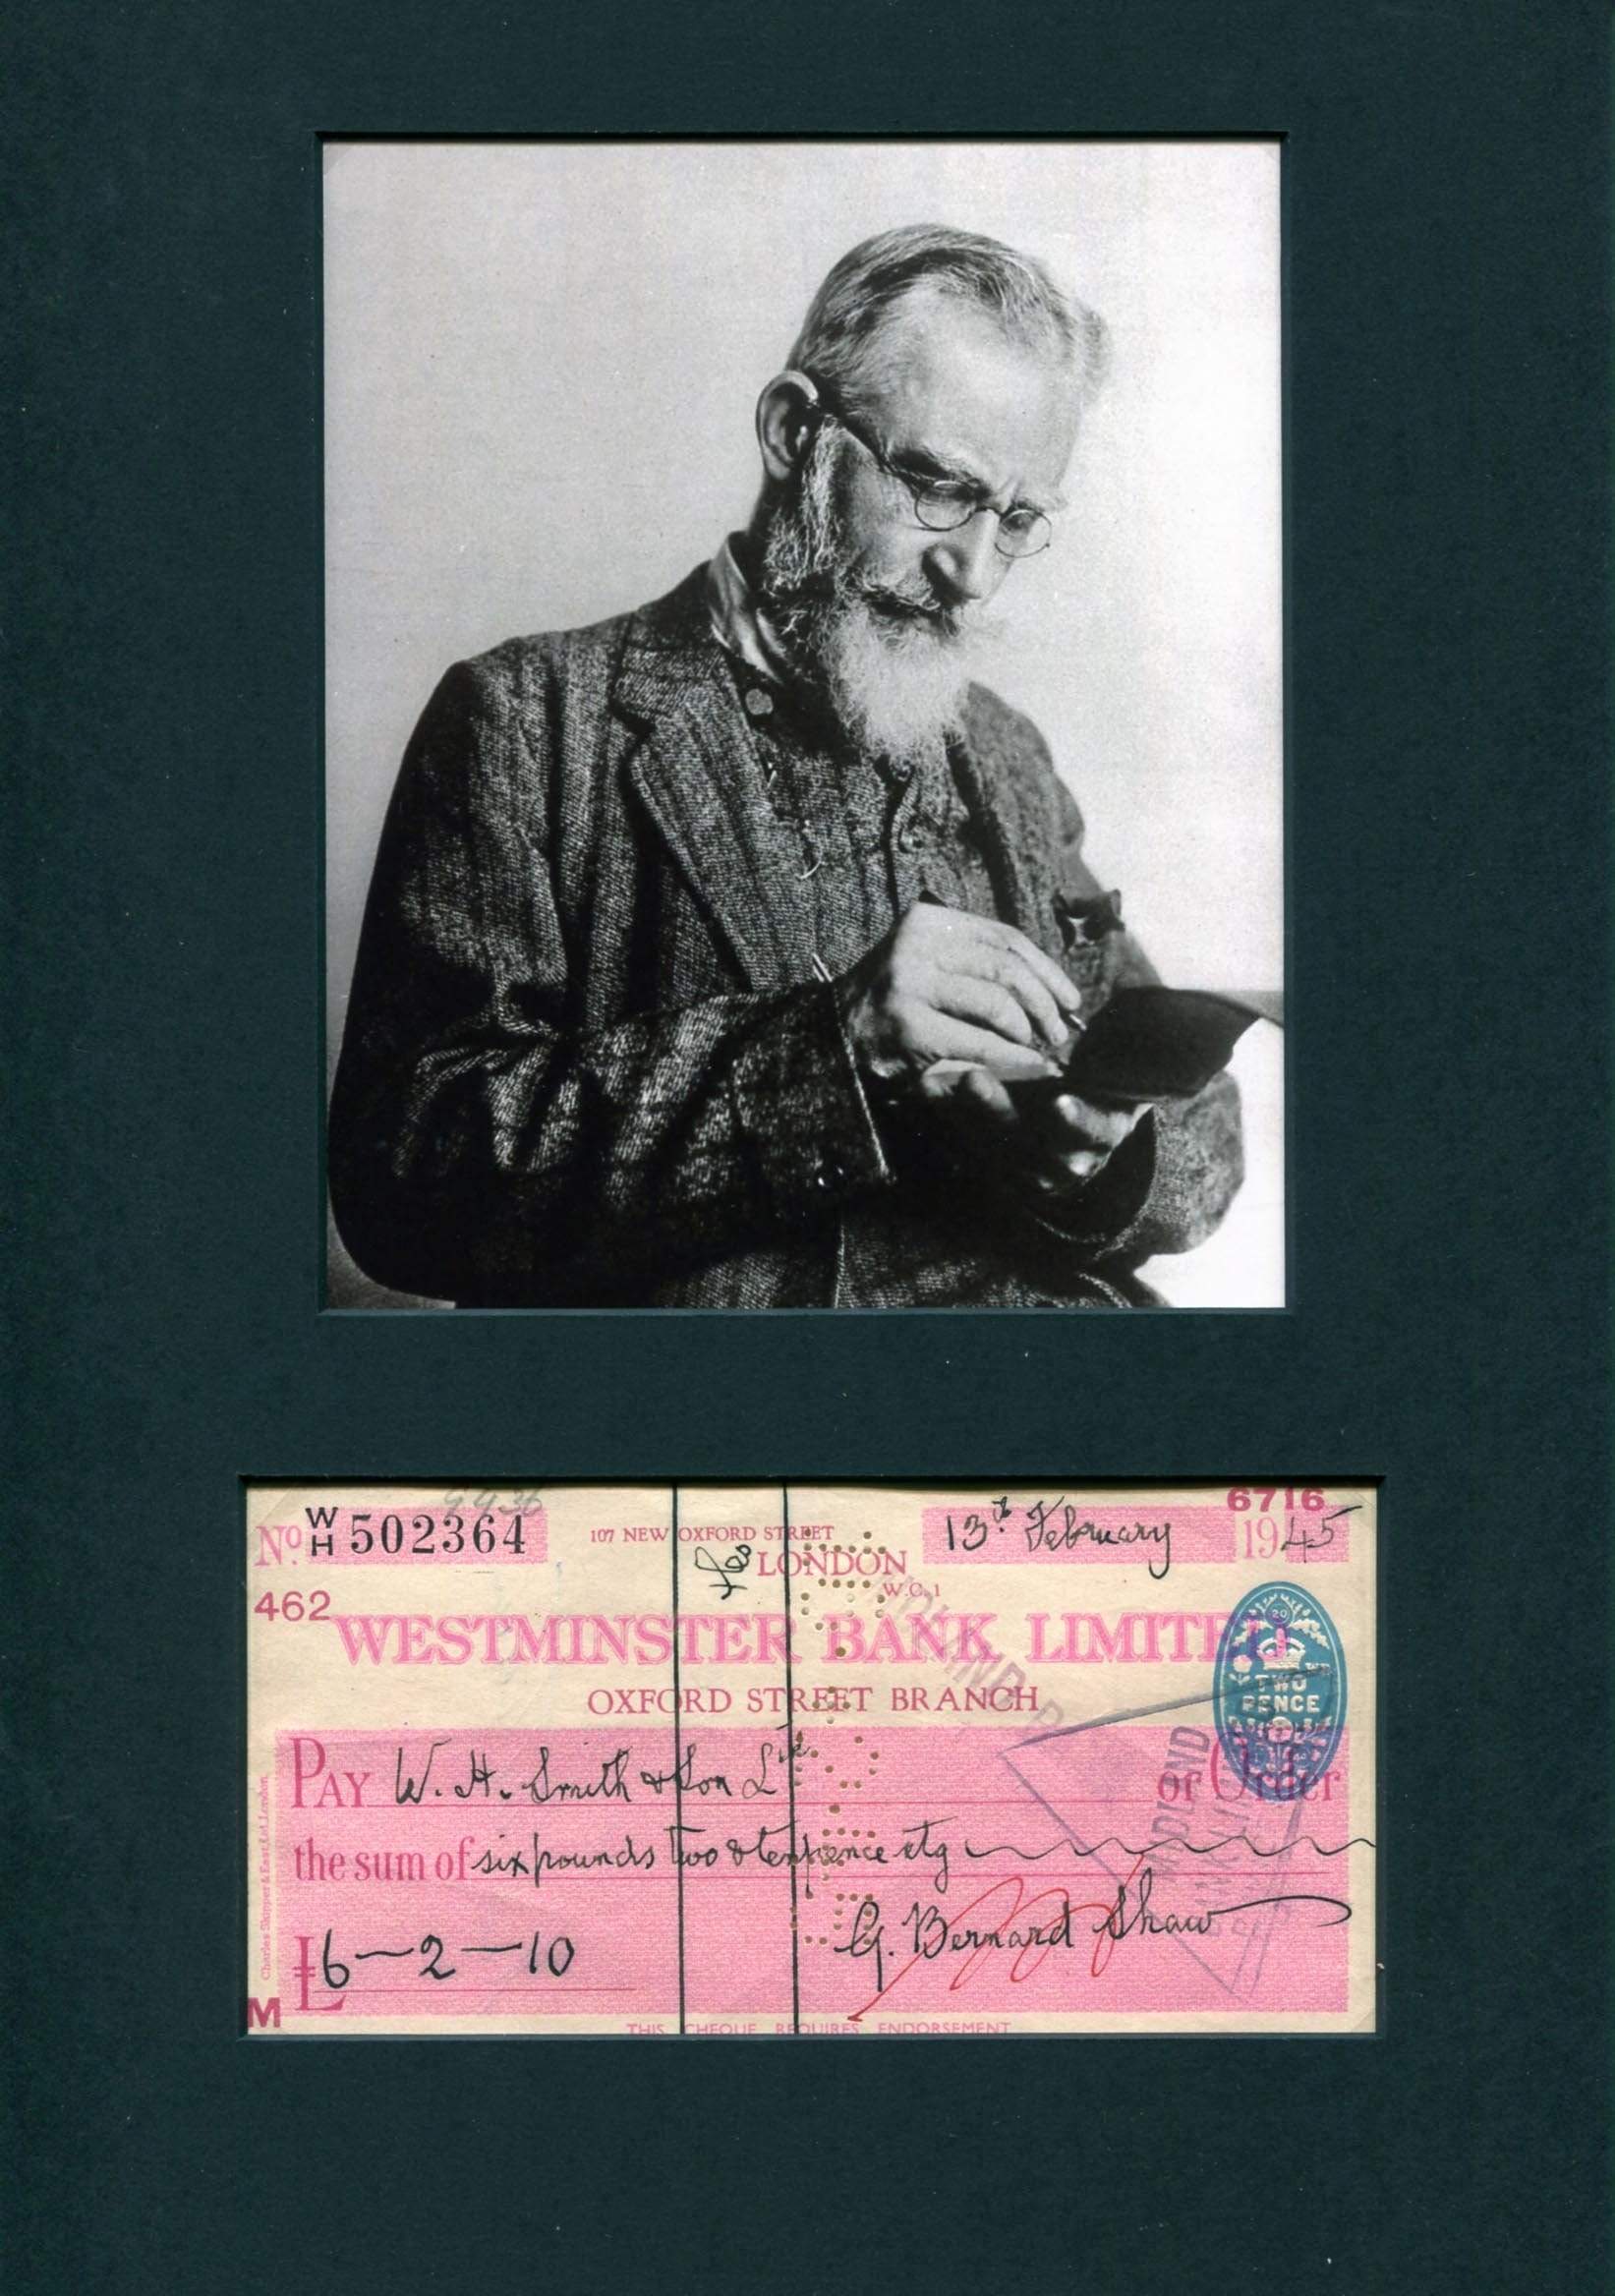 Shaw, George Bernard autograph